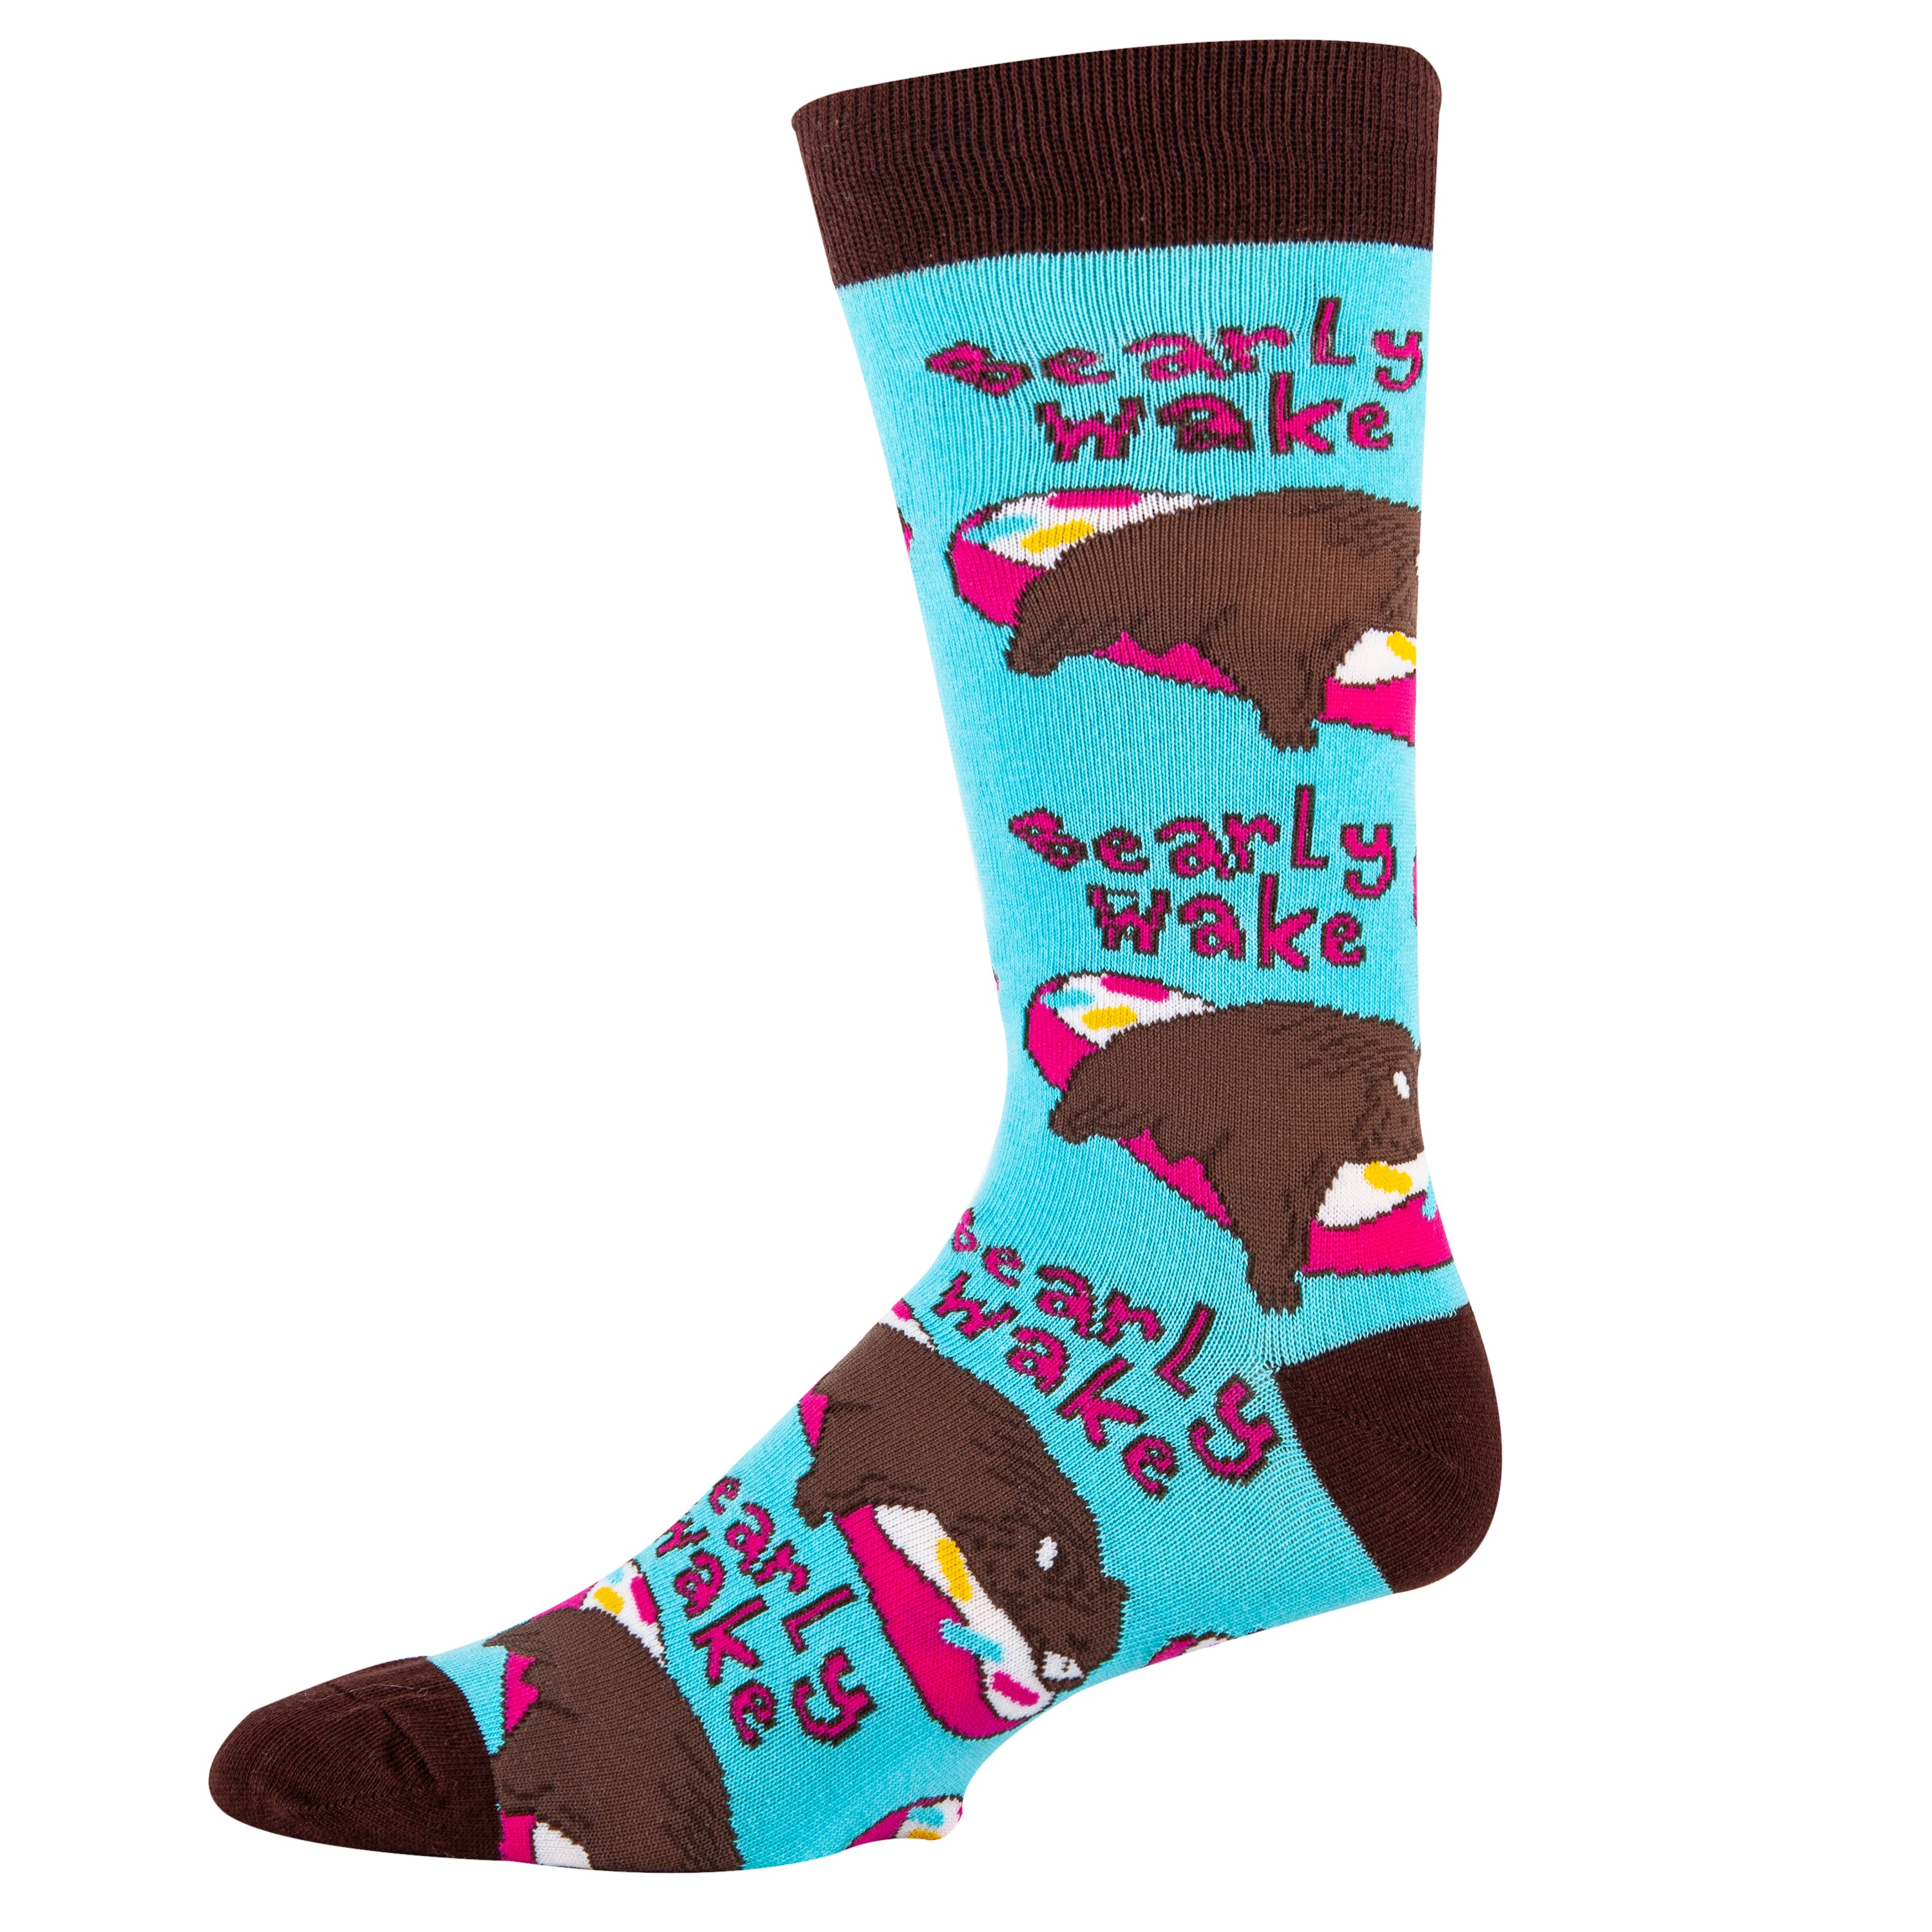 Bearly Awake Socks